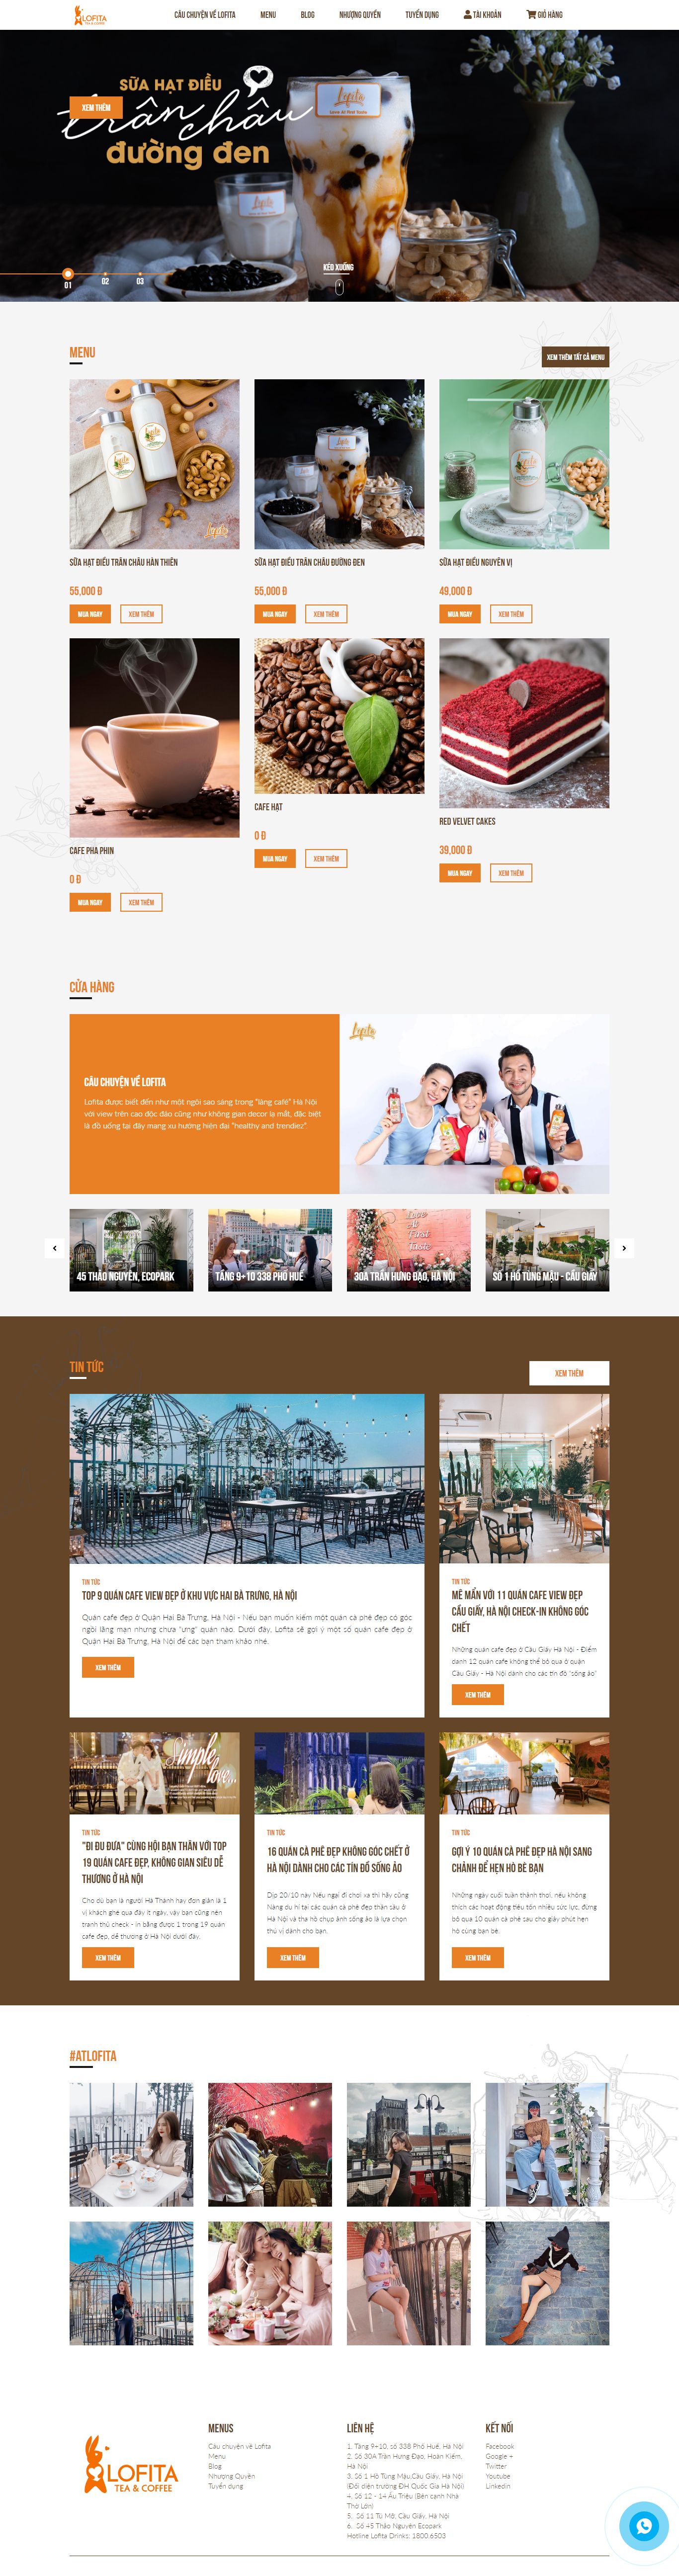 Thiết kế Website coffee - lofita.vn